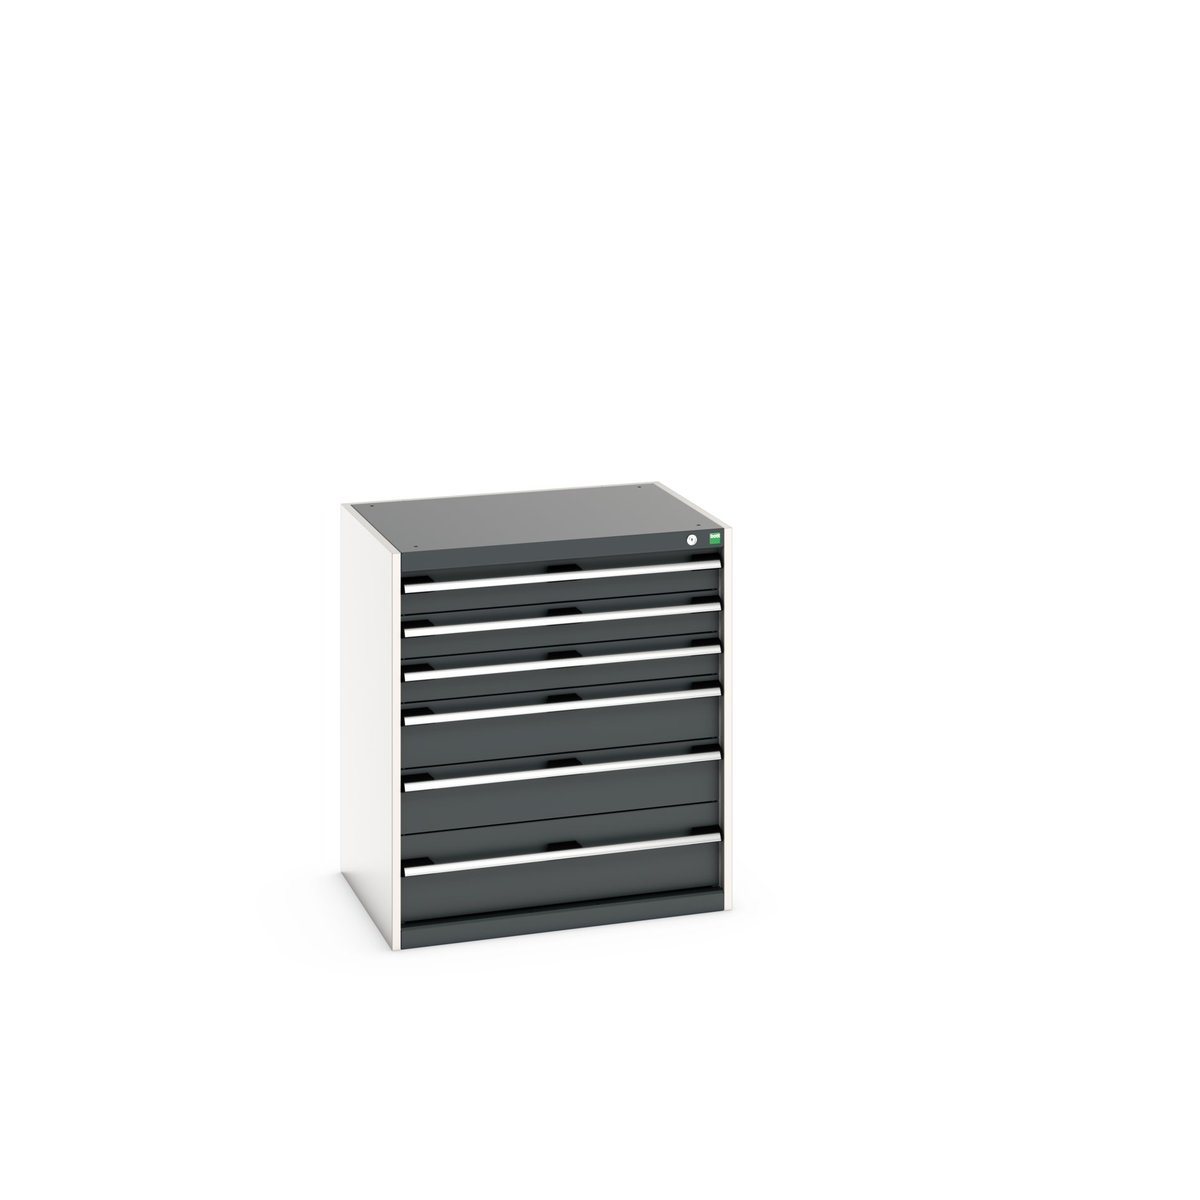 40020120. - cubio drawer cabinet